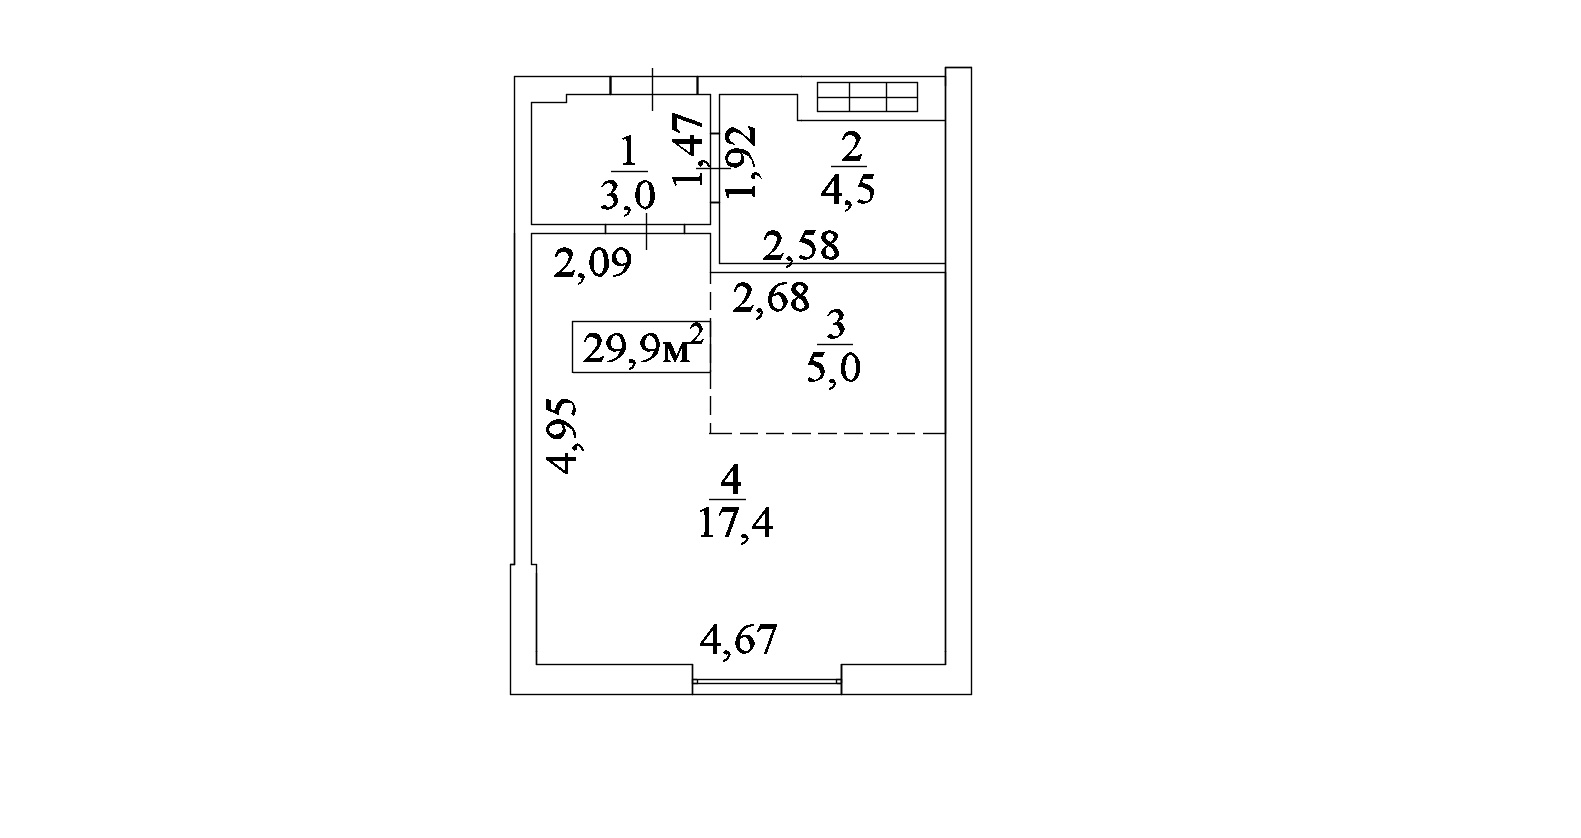 Planning Smart flats area 29.9m2, AB-10-08/0064а.